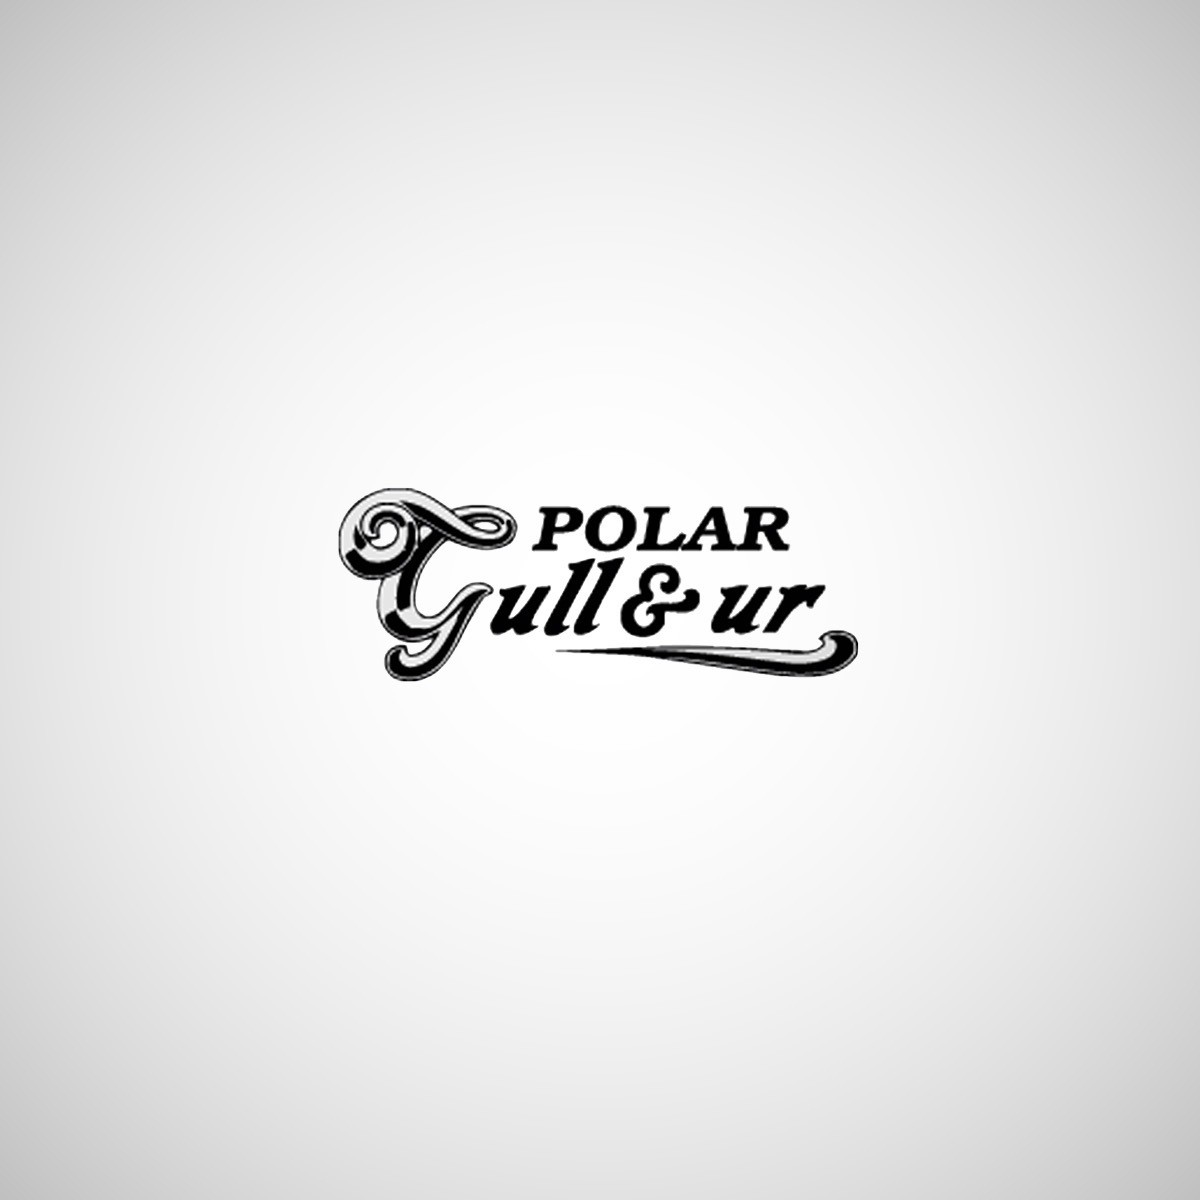 PolarGull_1200x1200.jpg